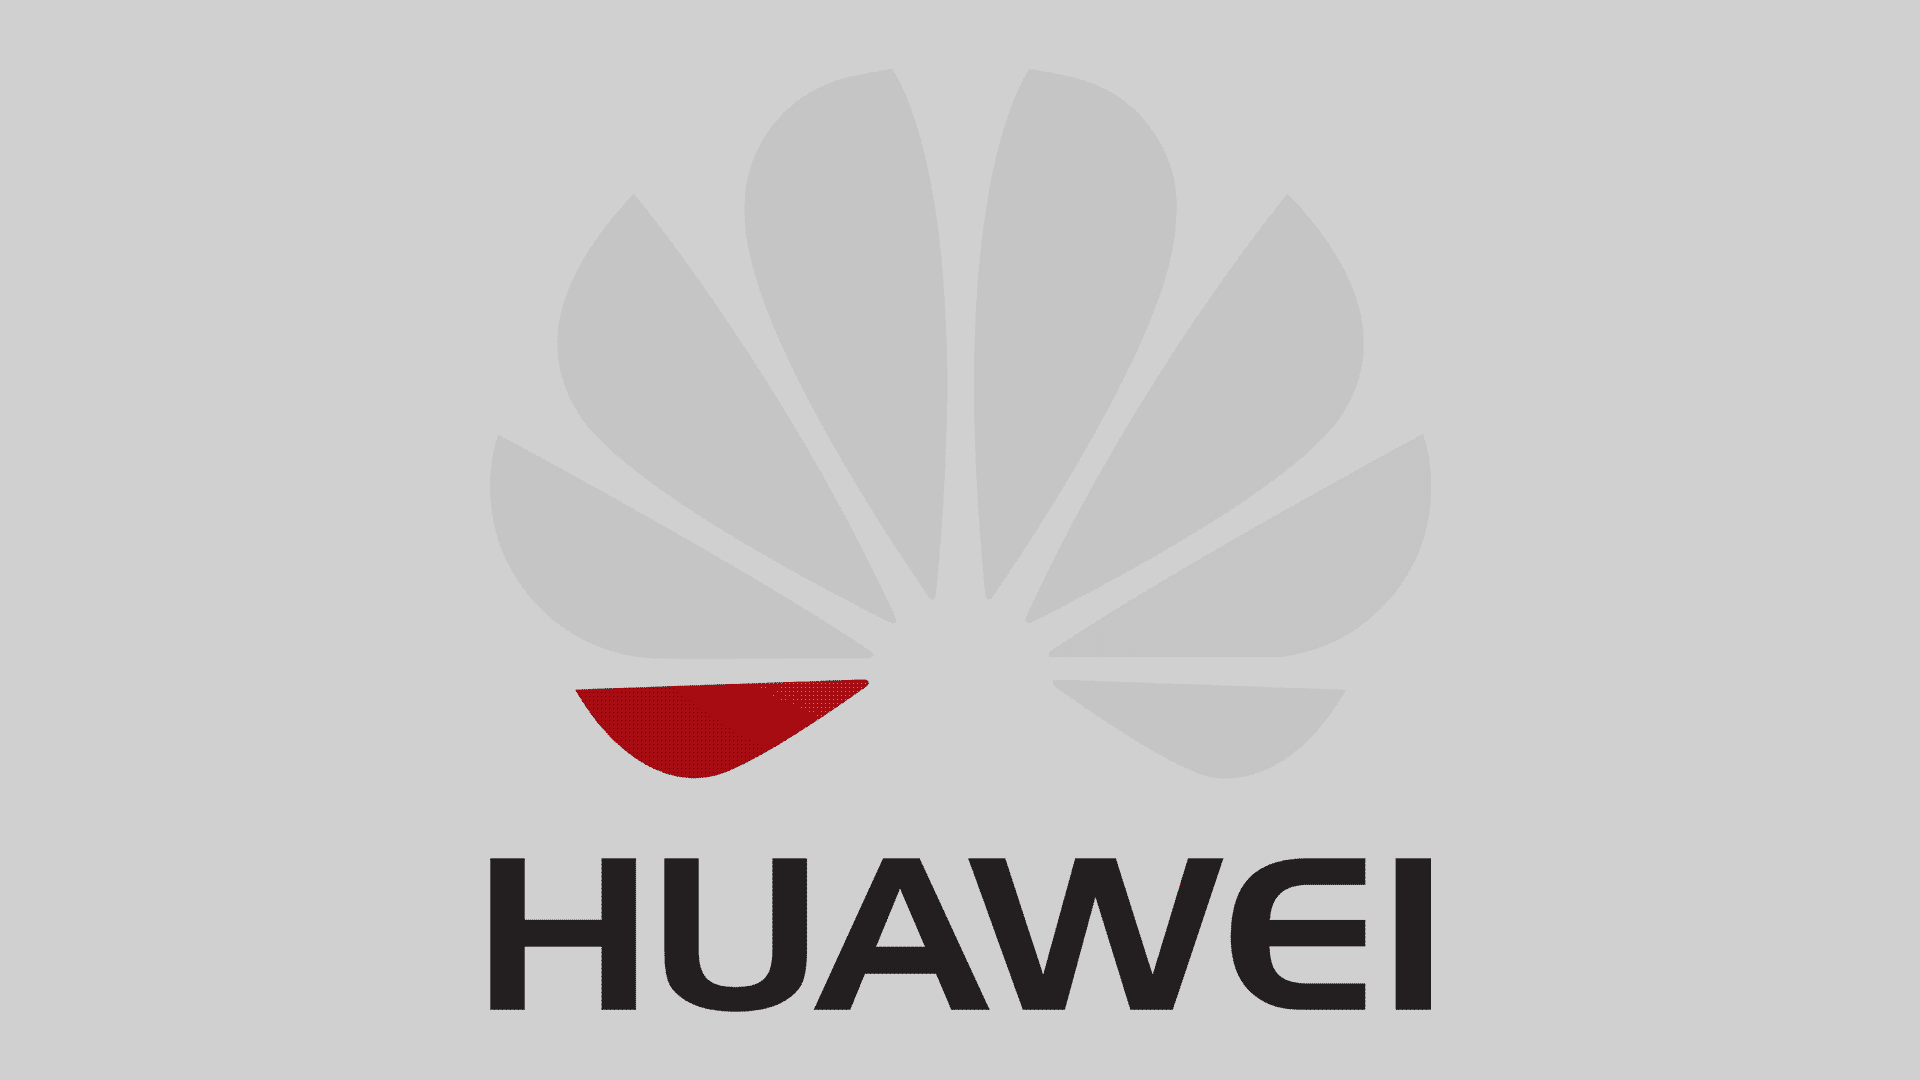 an illustration of huawei's logo